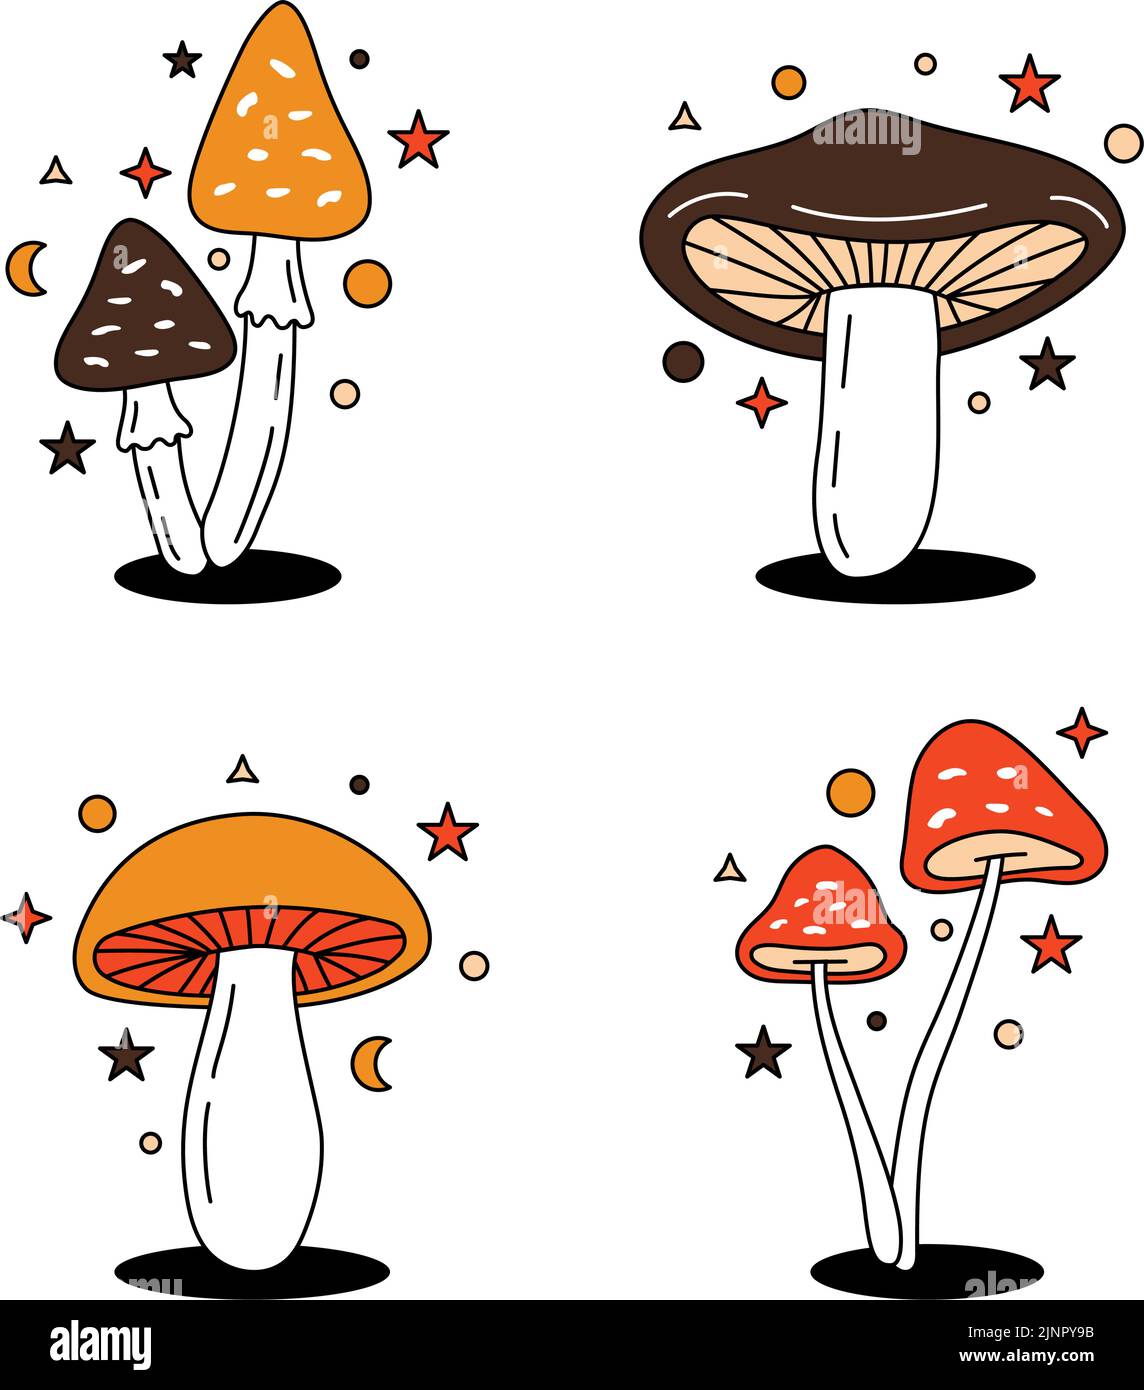 Magic mushroom set. Different colored mushroom symbols. Psychedelic mushrooms sketch illustration. Mushrooms in hippie 70s retro style. Stock Vector